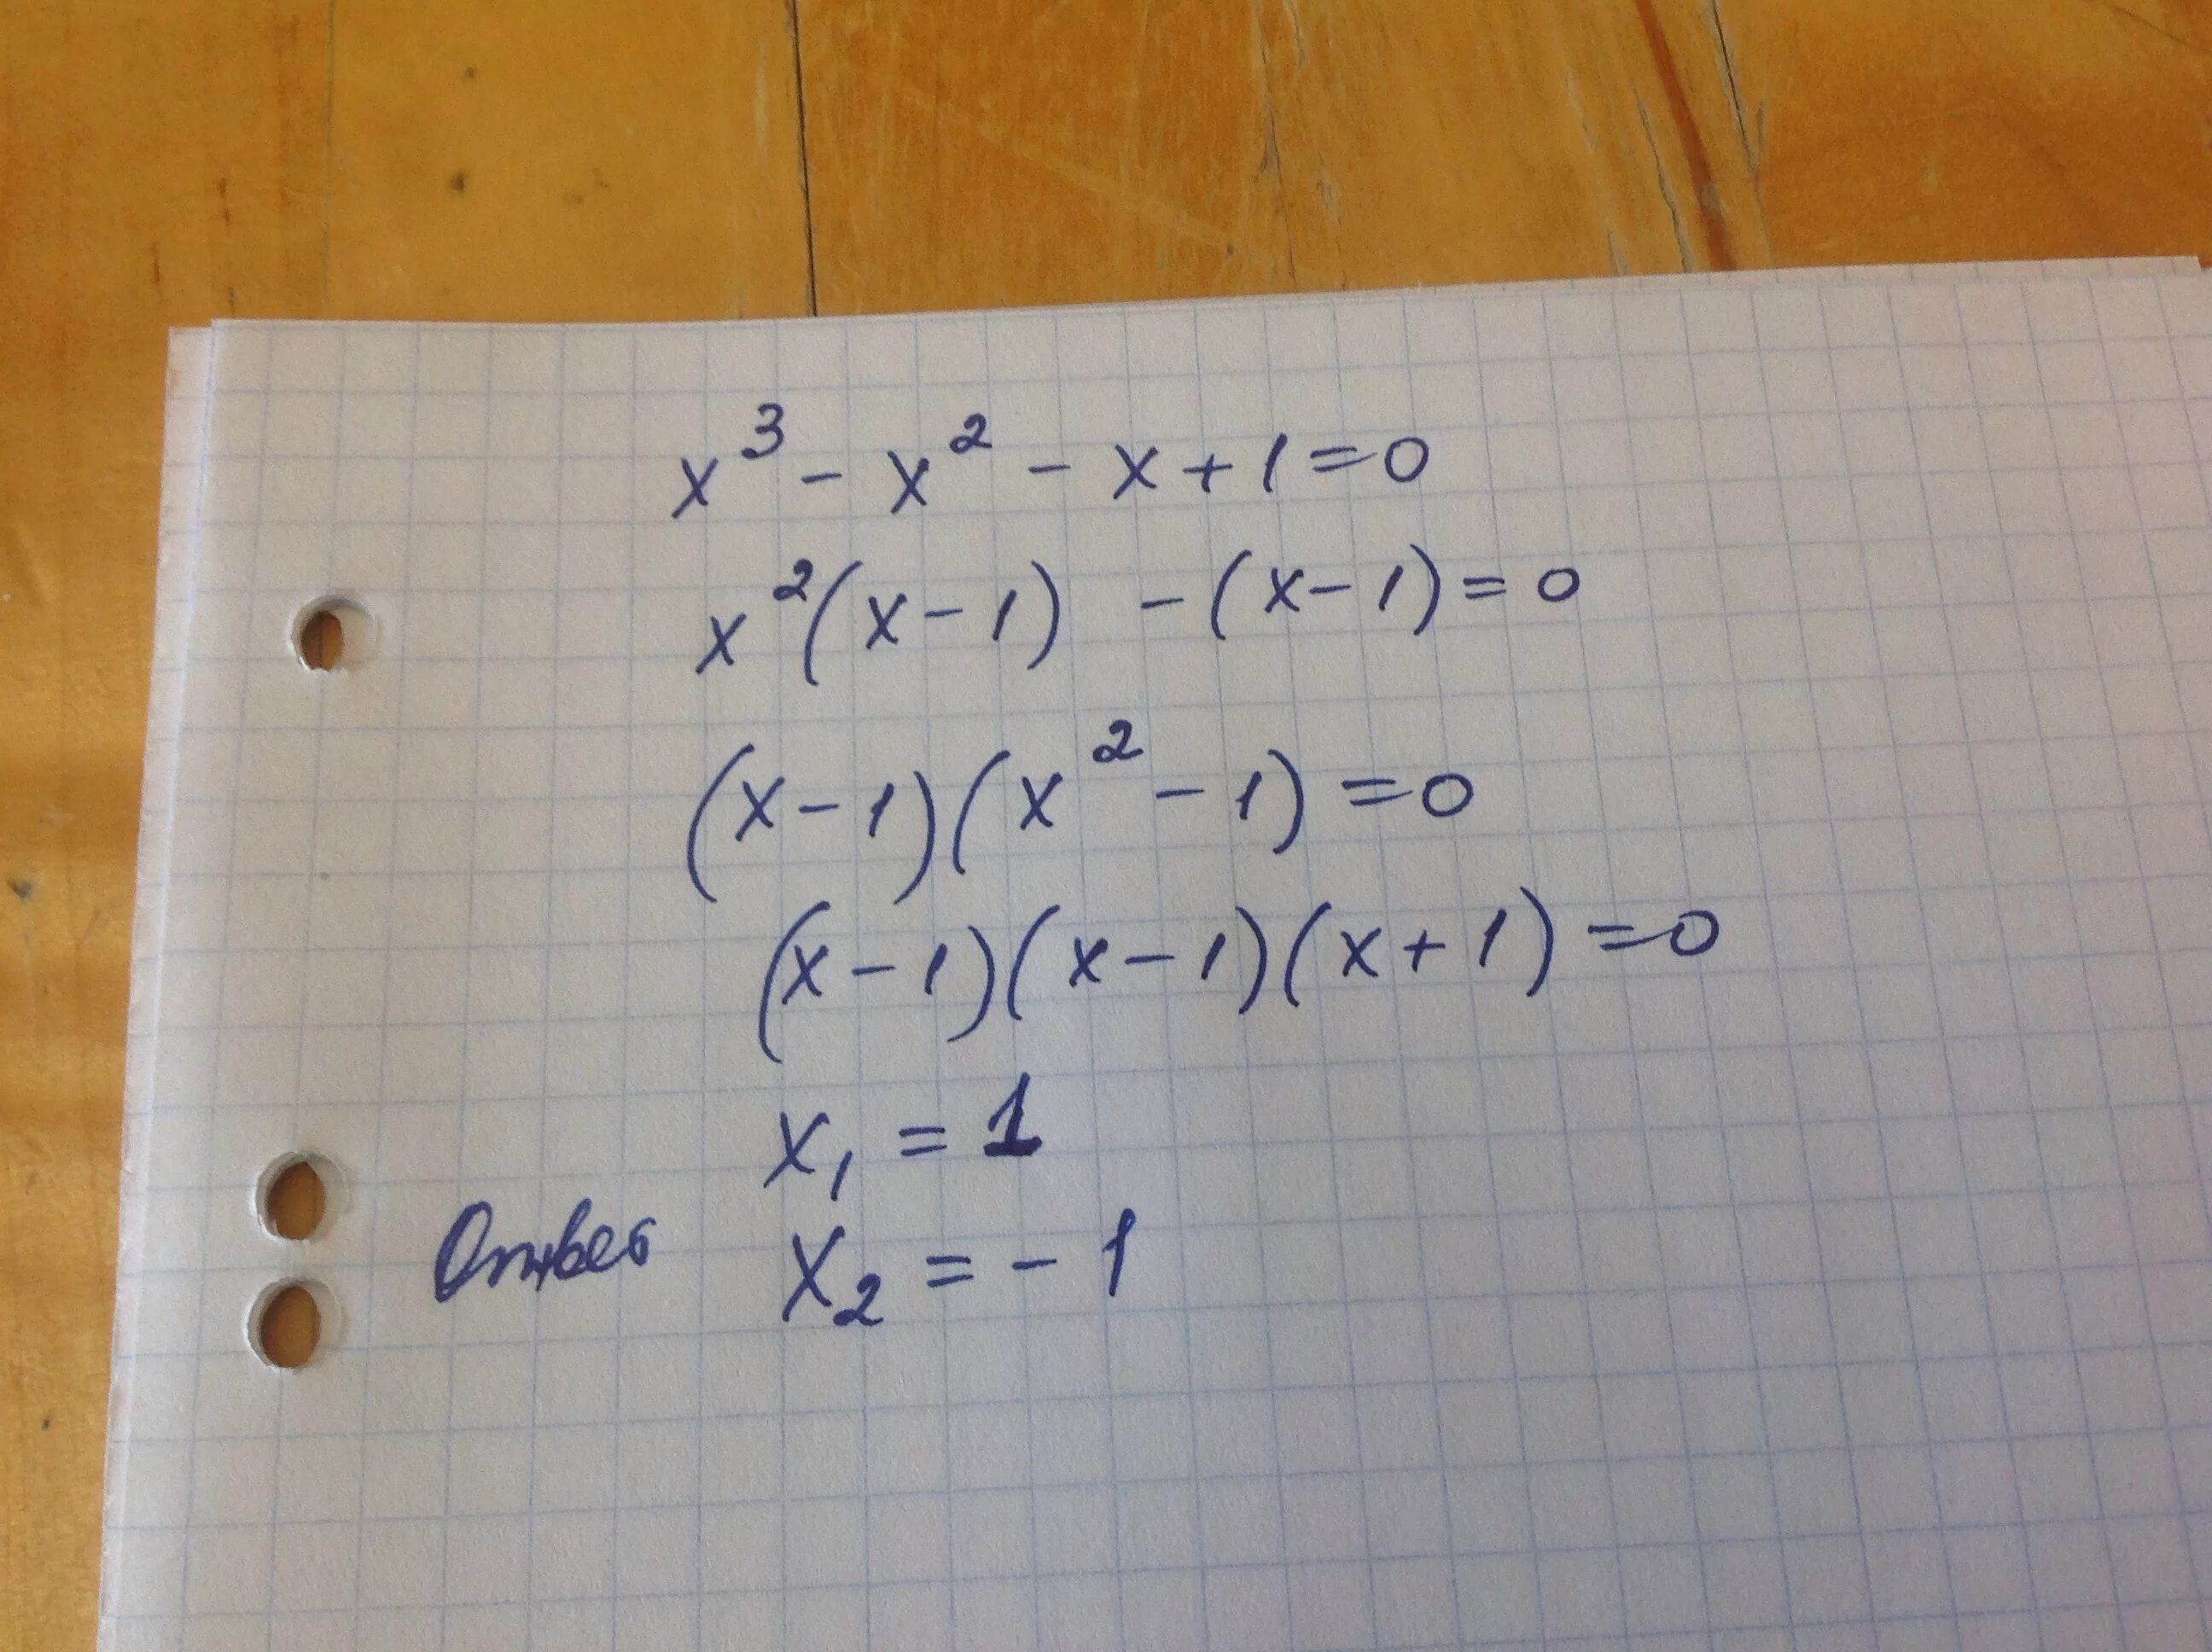 4x 20 0 x 5 1. (X-2)(-2x-3)=0. X^3-X^2-X+1=0. 2^X=3^X. 3-X/3=X/2.